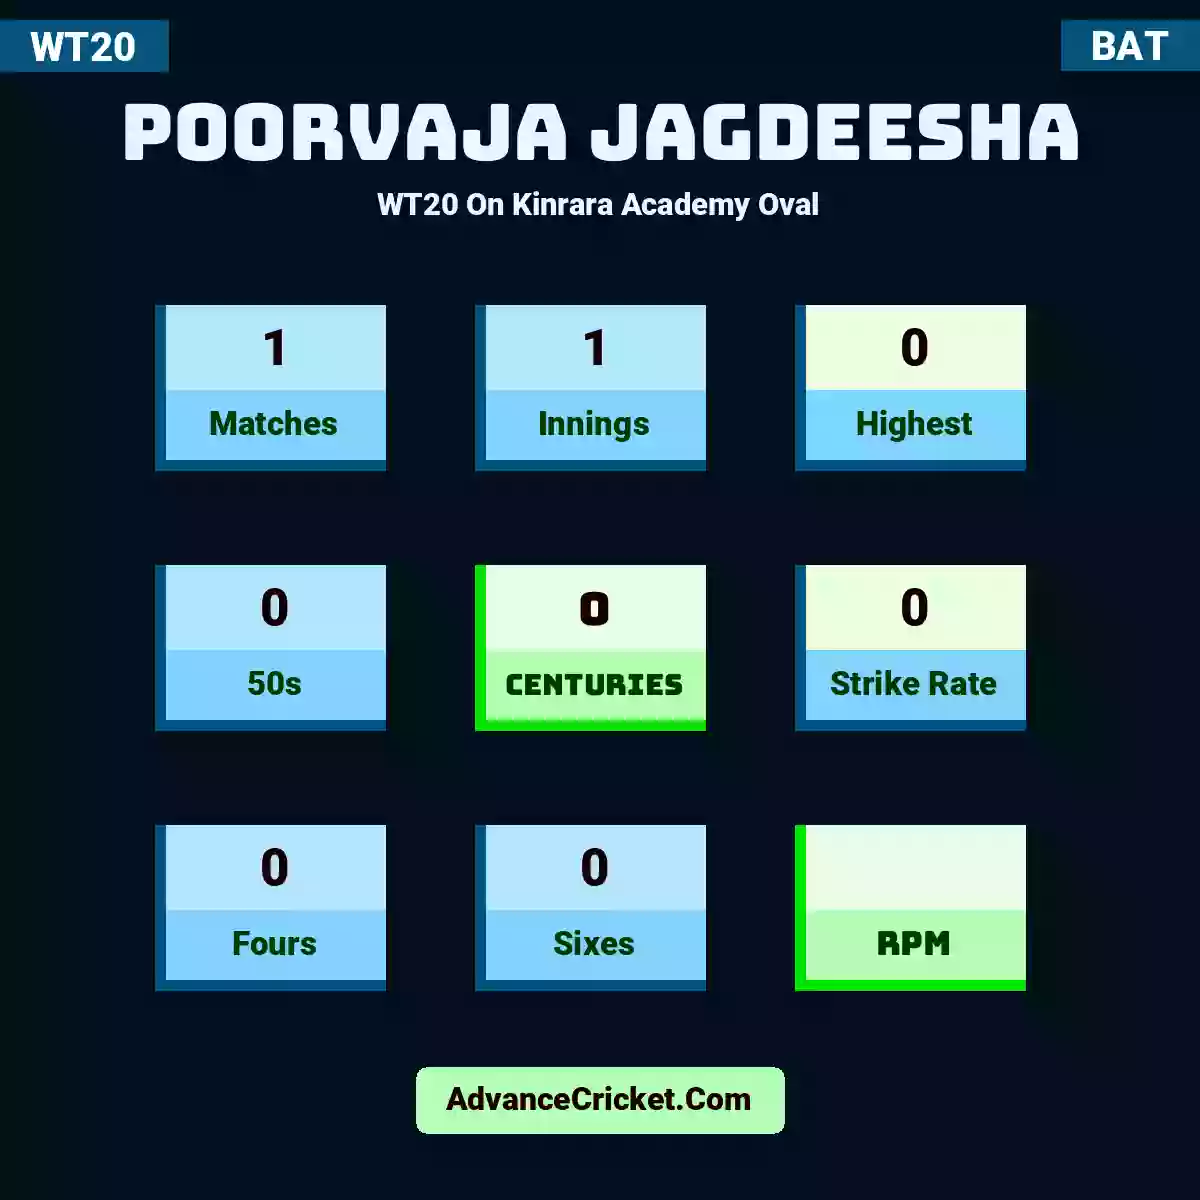 Poorvaja Jagdeesha WT20  On Kinrara Academy Oval, Poorvaja Jagdeesha played 1 matches, scored 0 runs as highest, 0 half-centuries, and 0 centuries, with a strike rate of 0. P.Jagdeesha hit 0 fours and 0 sixes.